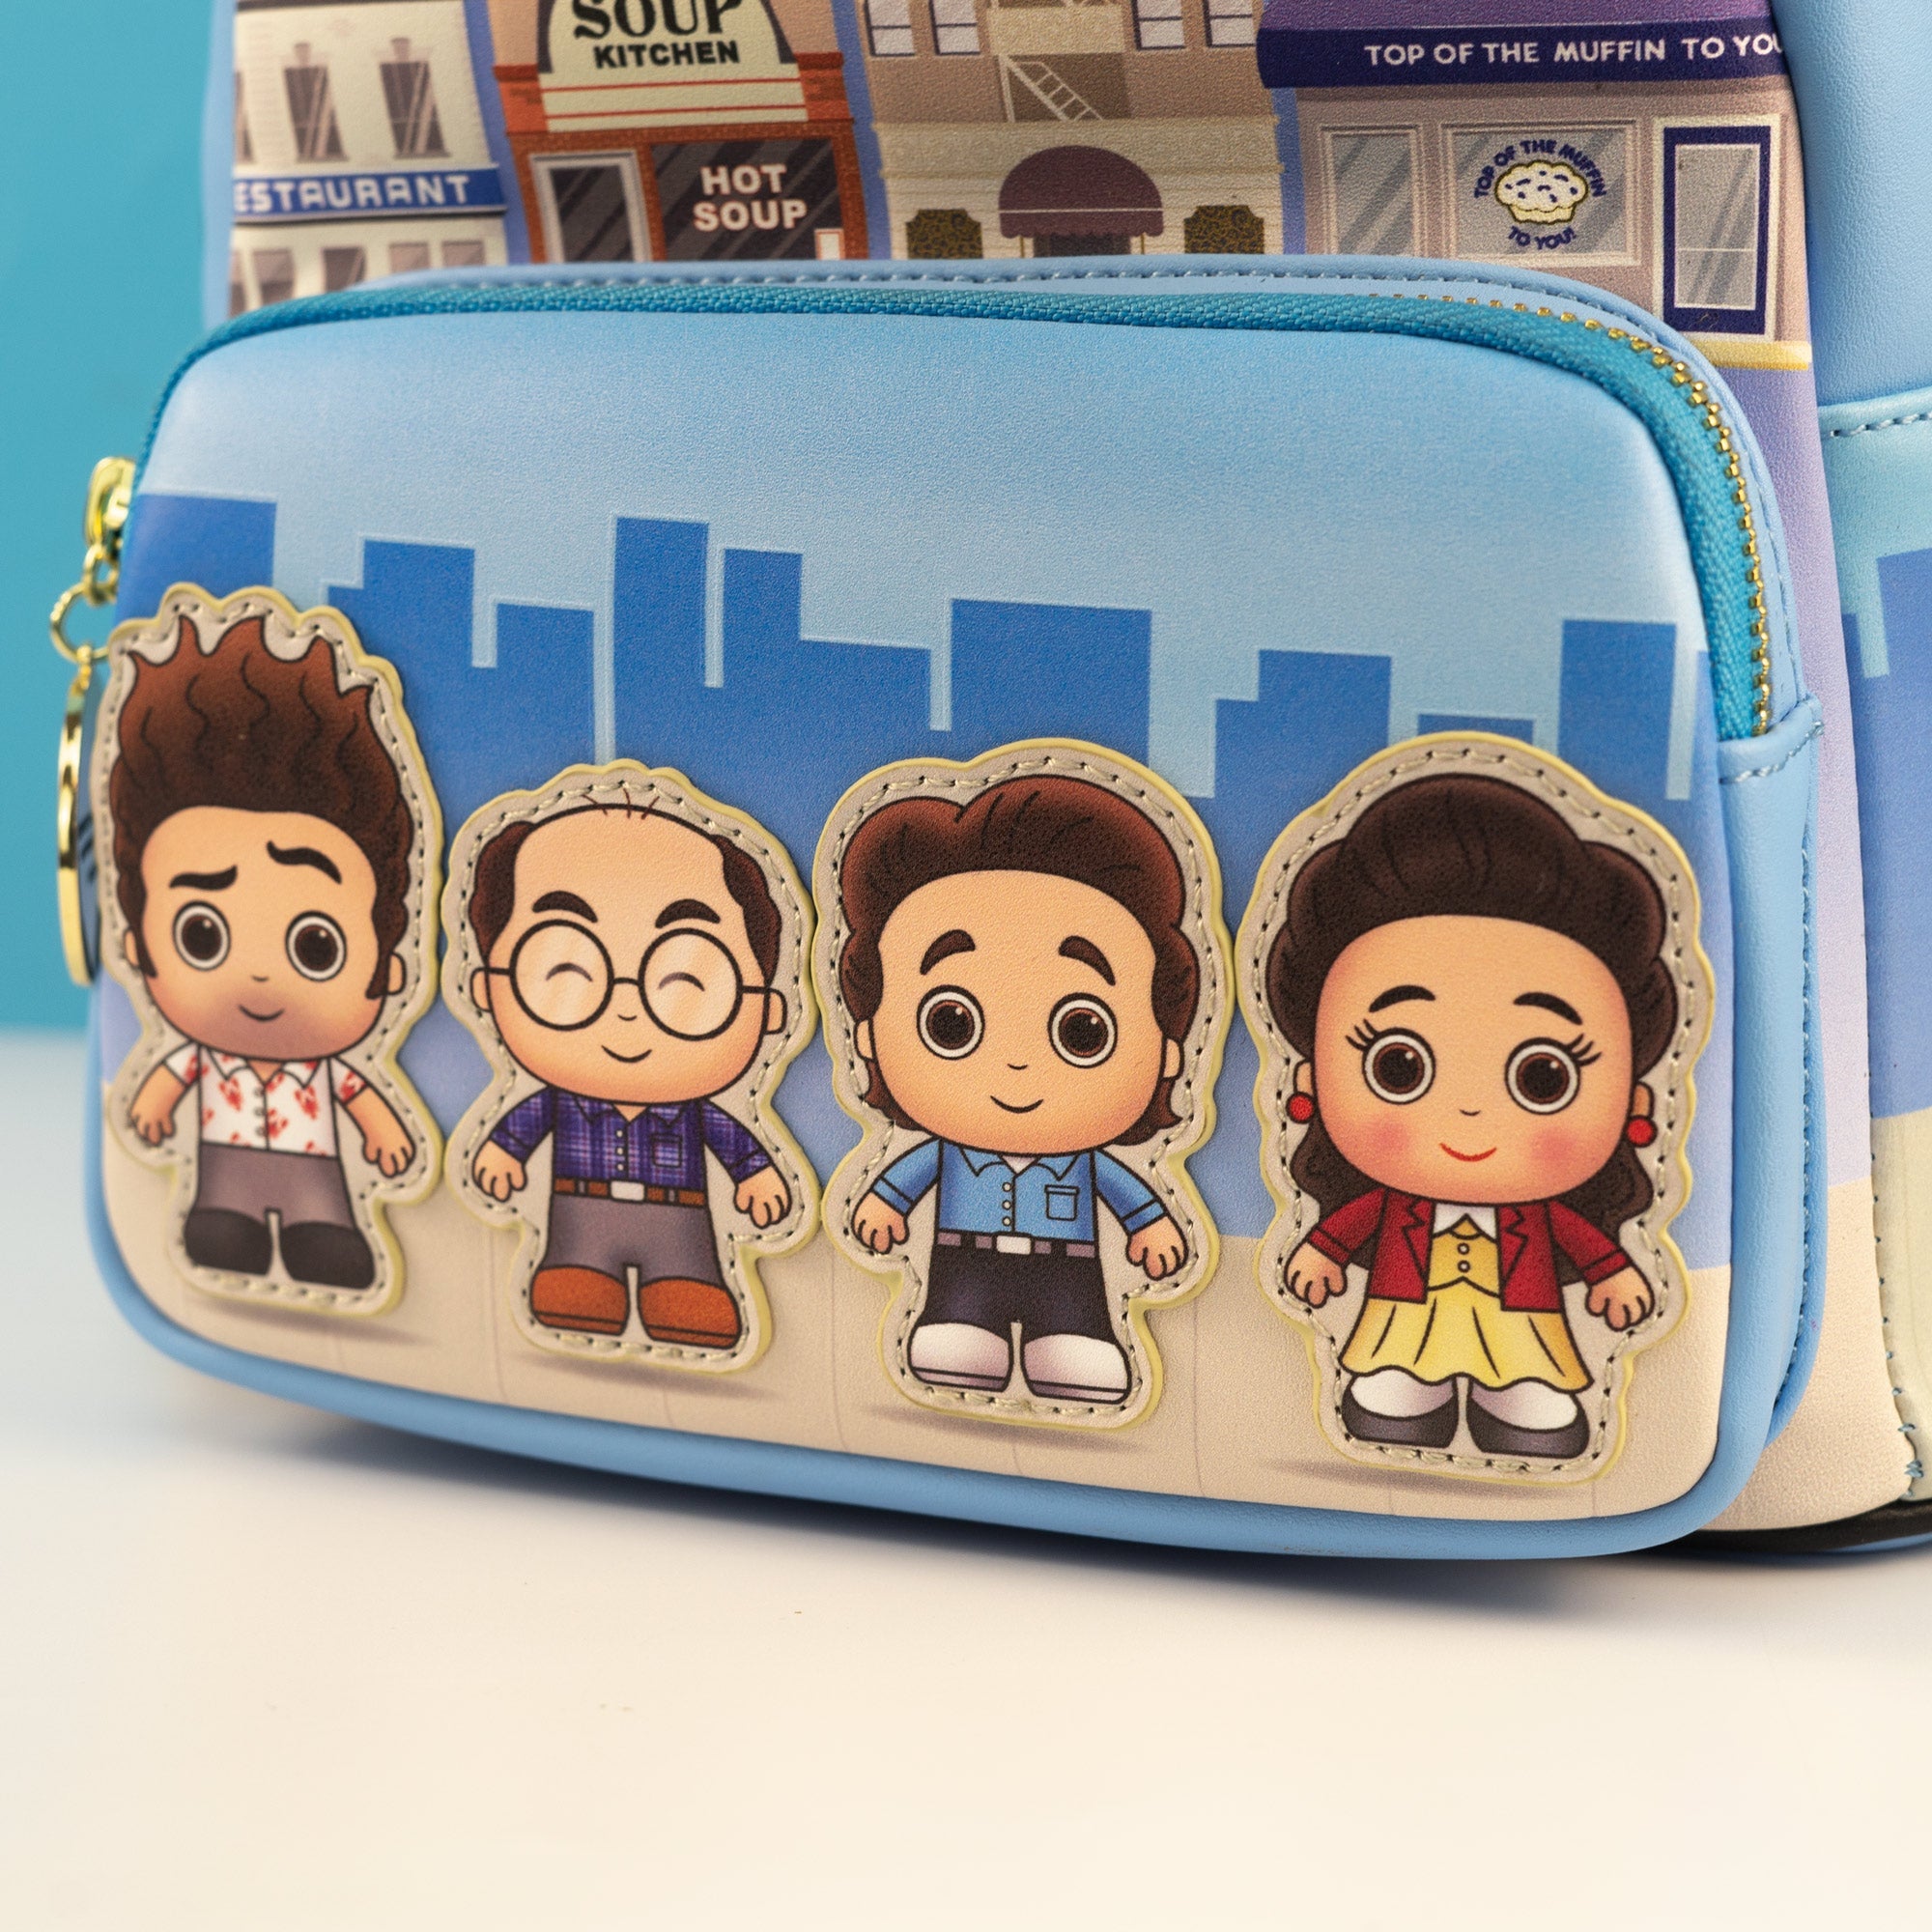 Loungefly x Seinfeld Chibi City Mini Backpack - GeekCore